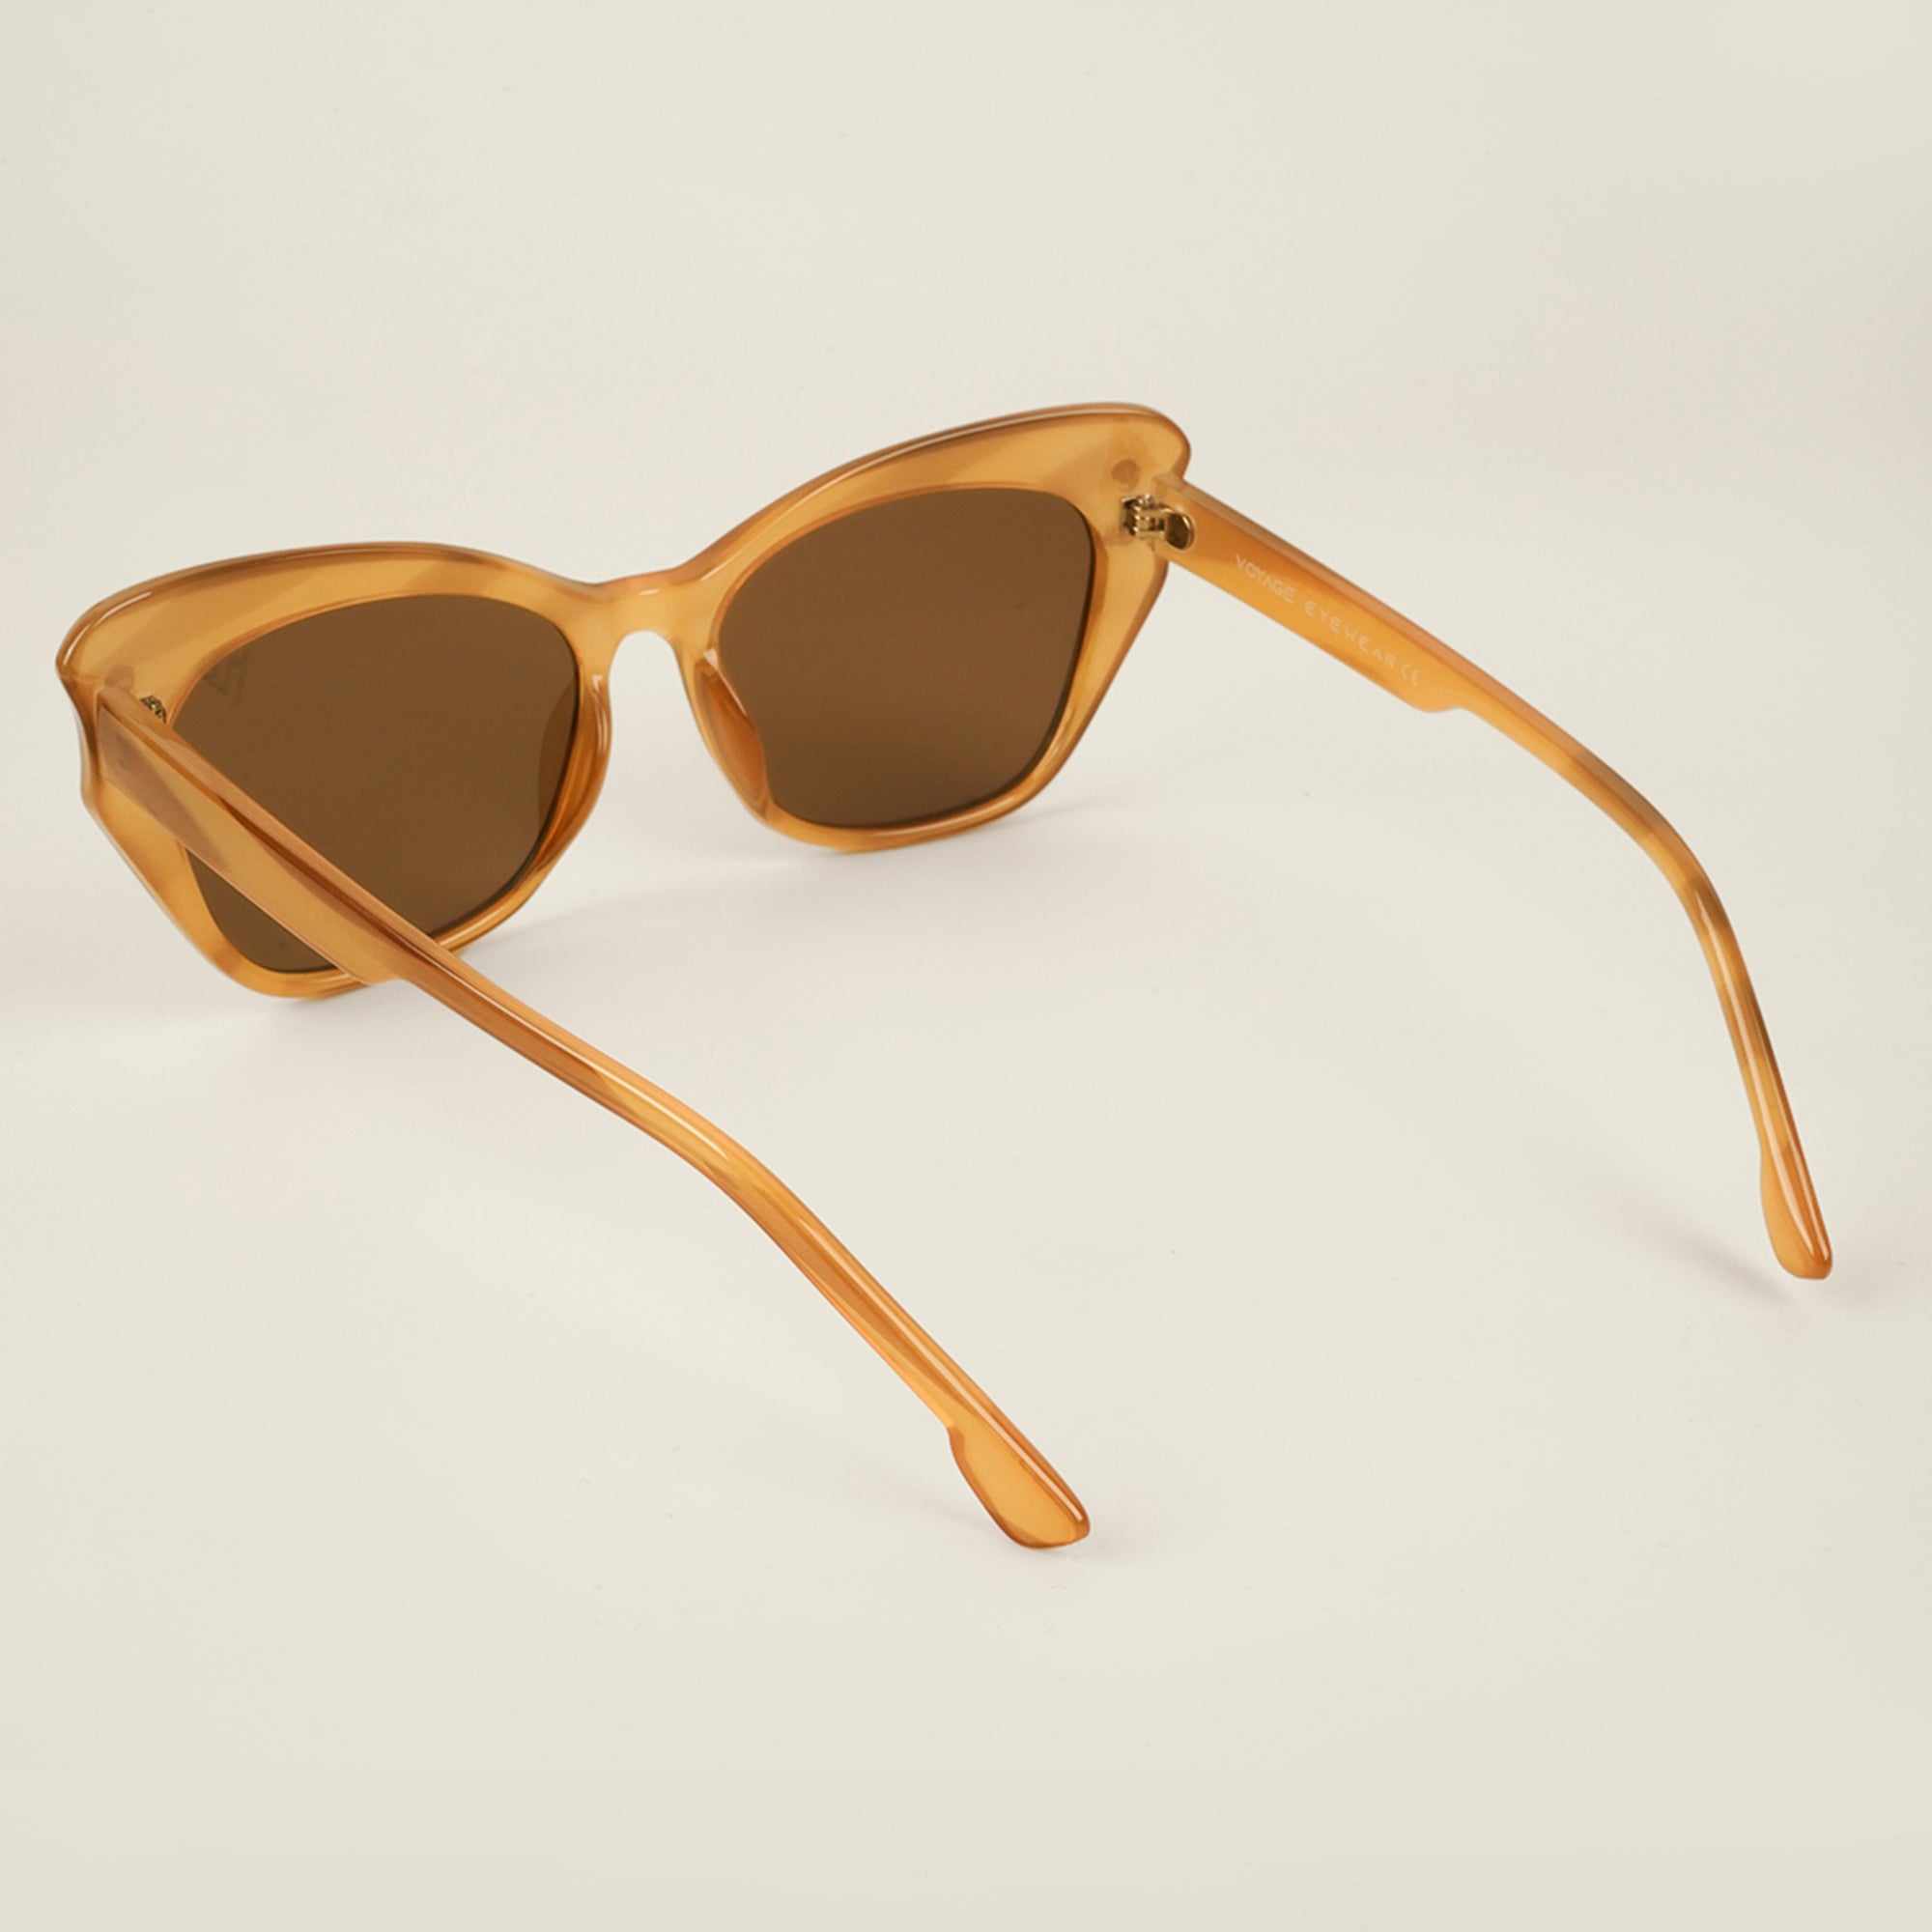 Voyage Light Brown Cateye Sunglasses for Women (9174MG4109)